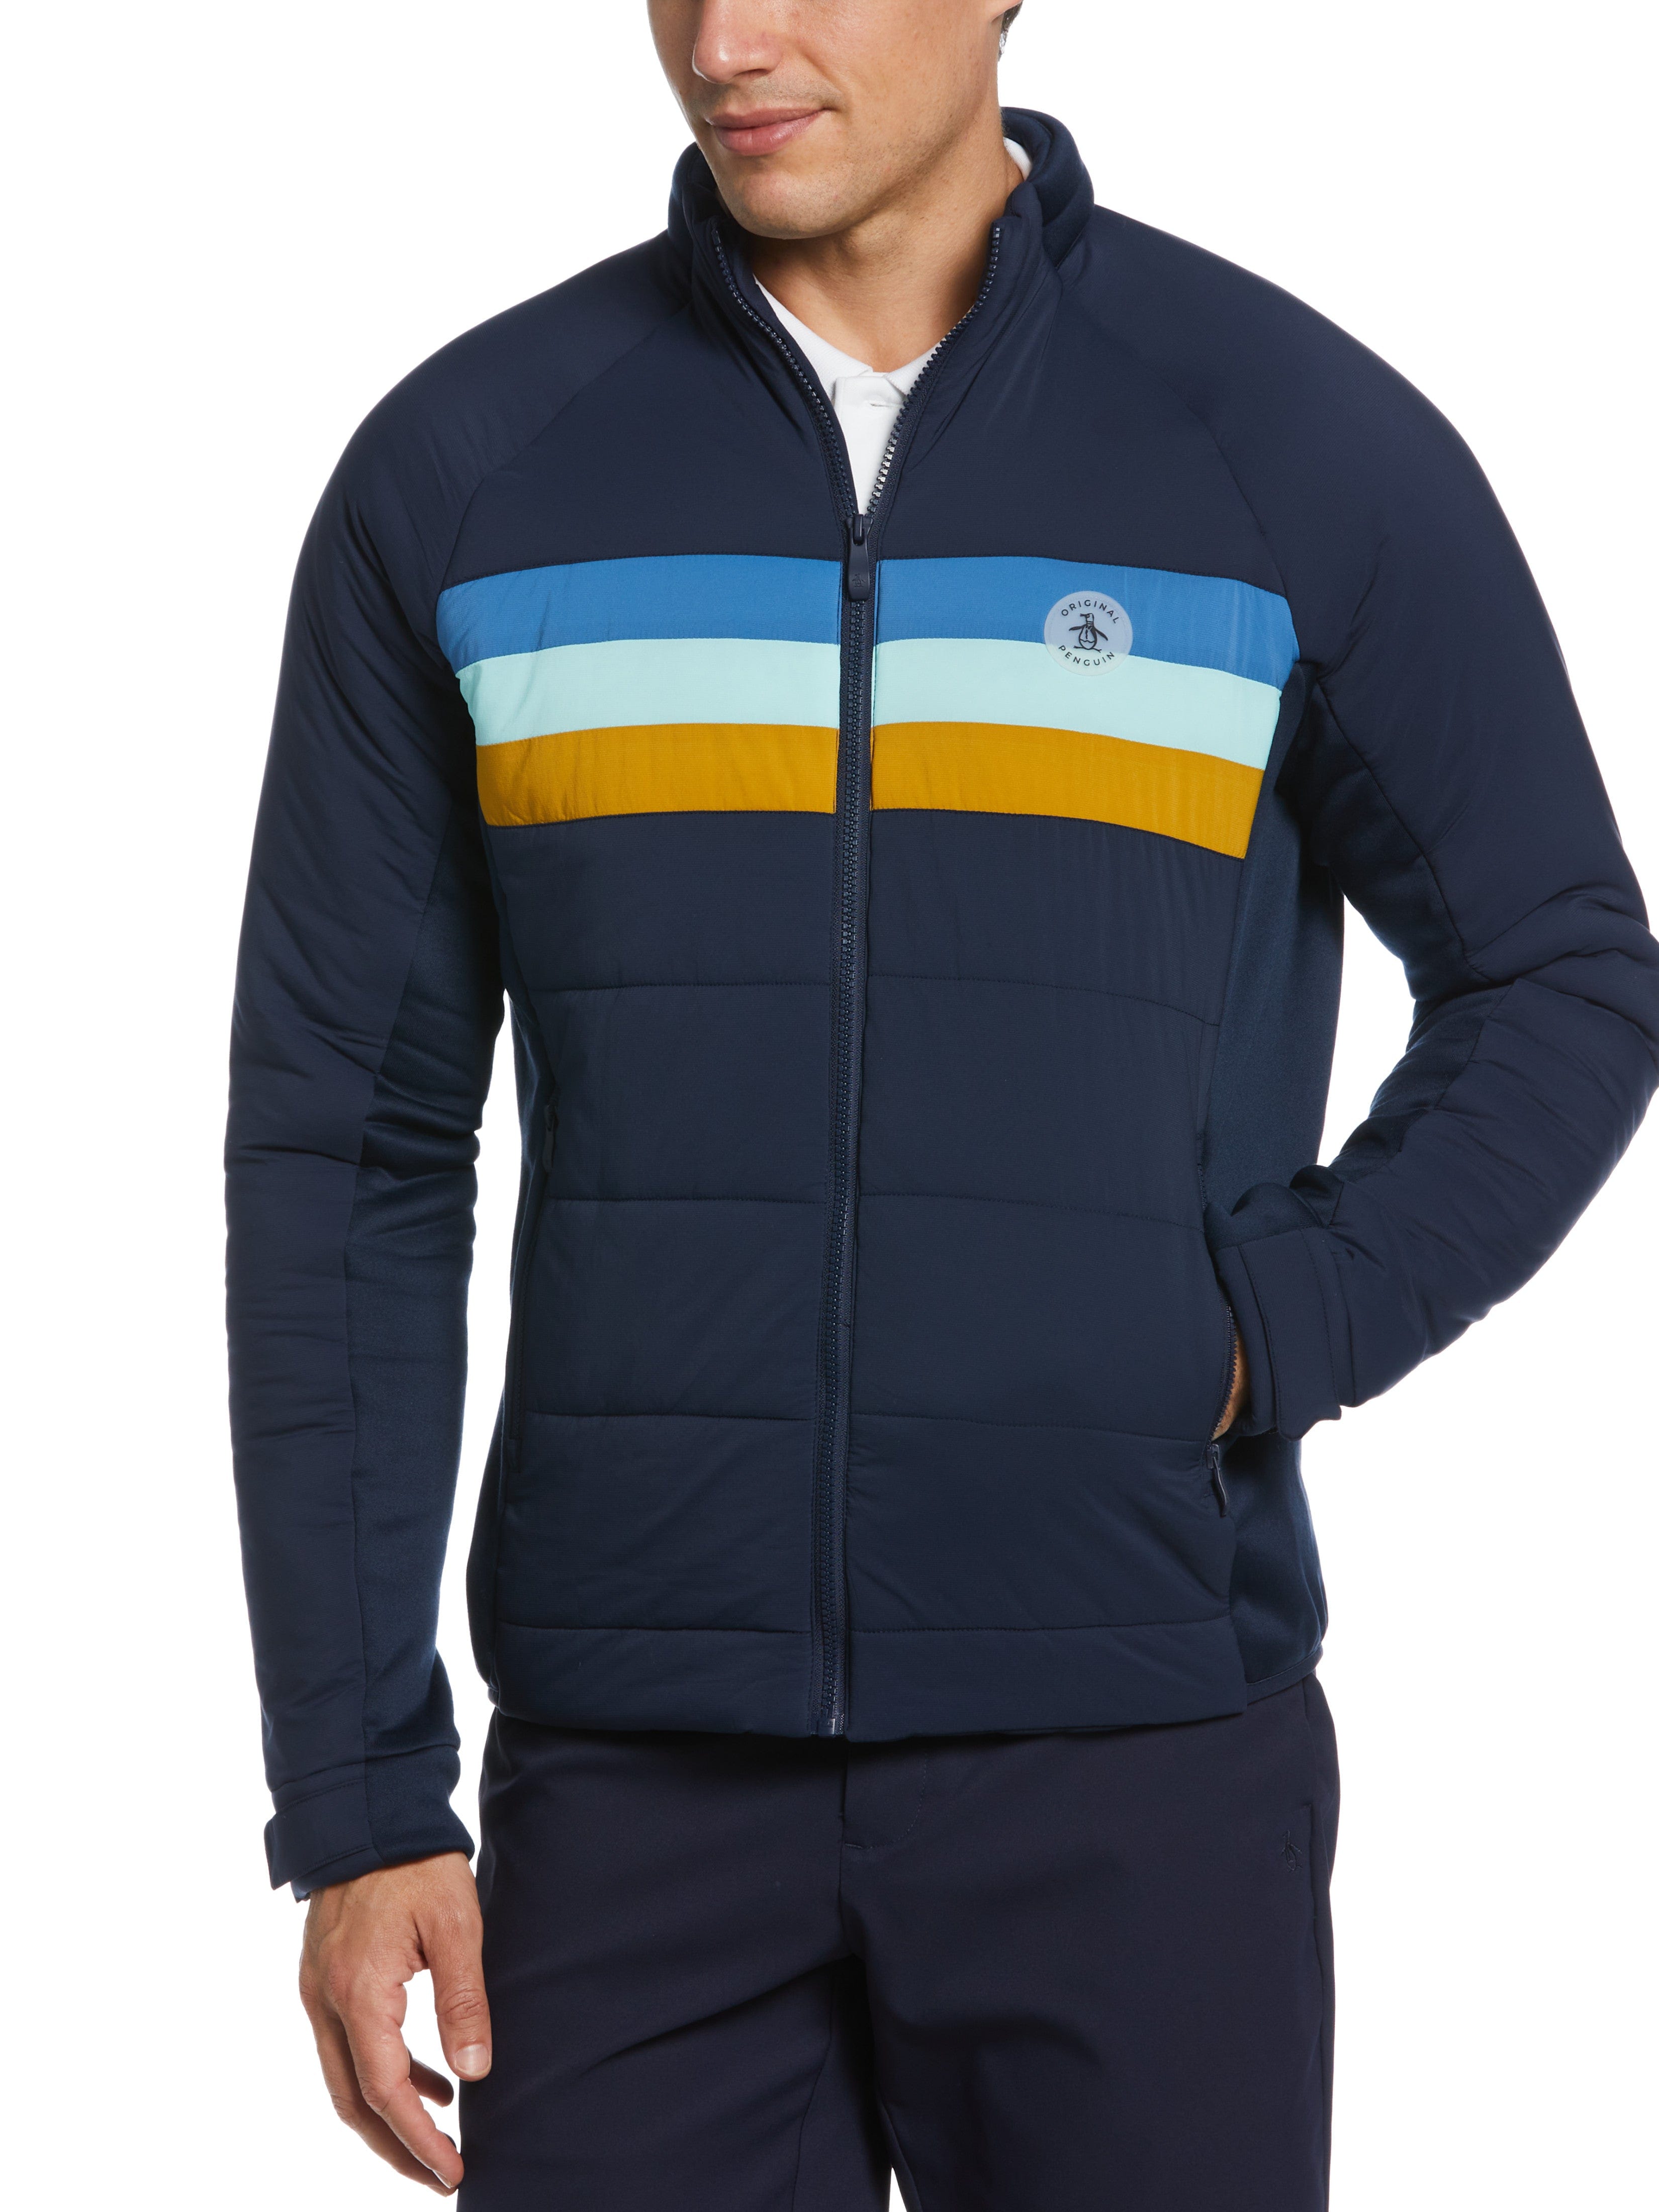 Original Penguin Mens Insulated 70s Golf Jacket Top, Size Large, Dark Navy Blue, 100% Nylon | Golf Apparel Shop